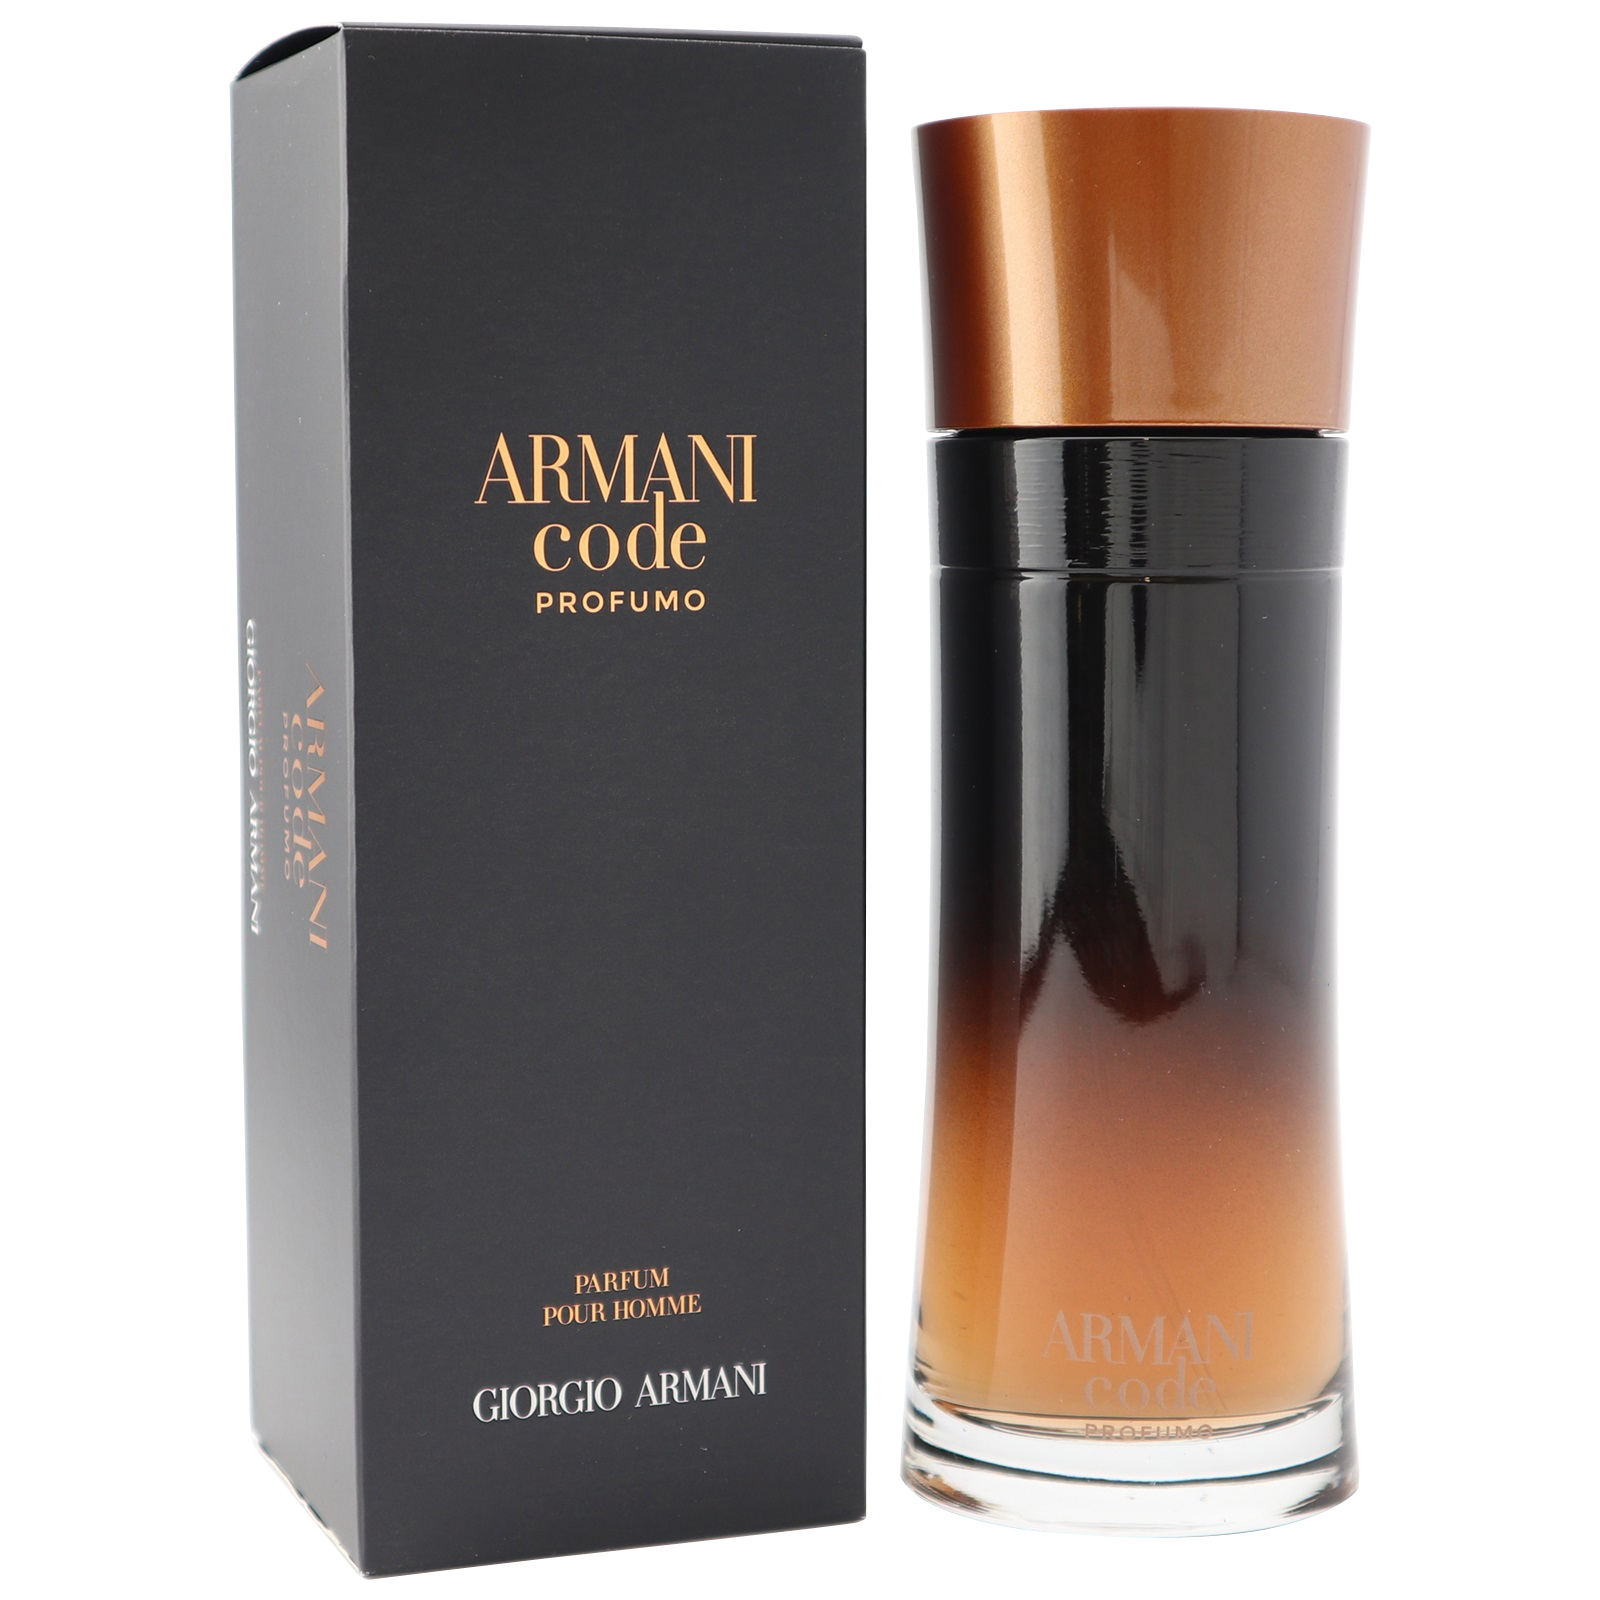 Armani Code Profumo-Giorgio Armani ανδρικό άρωμα τύπου 10ml